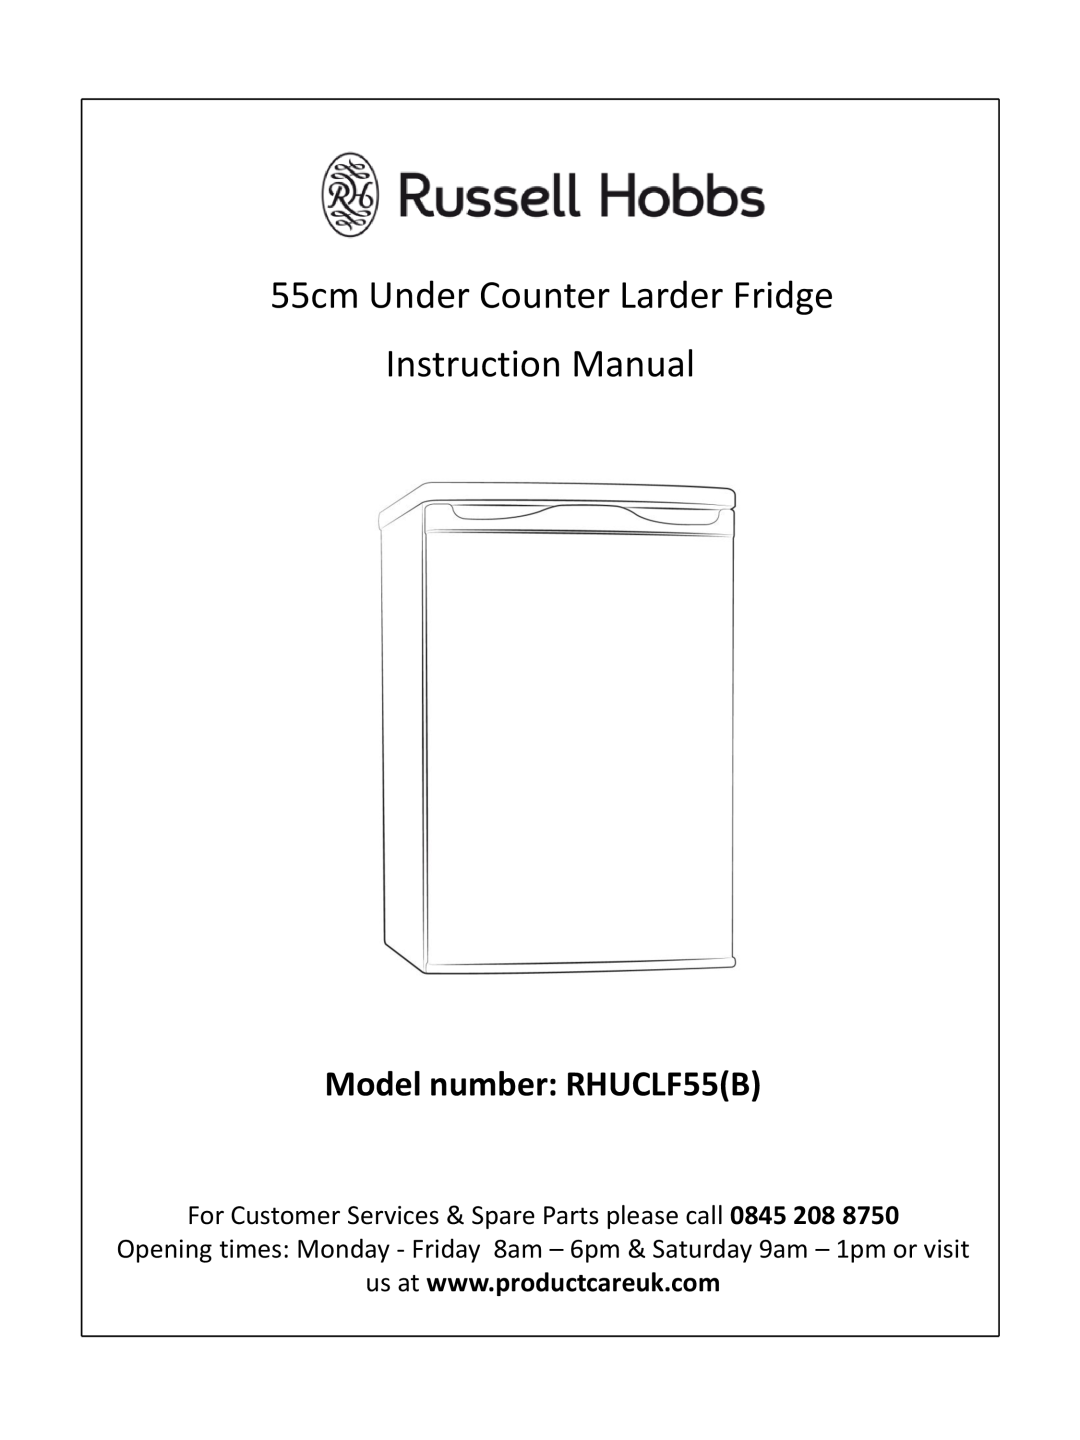 Russell Hobbs RHUCLF55(B) instruction manual 55cm Under Counter Larder Fridge, Model number RHUCLF55B 